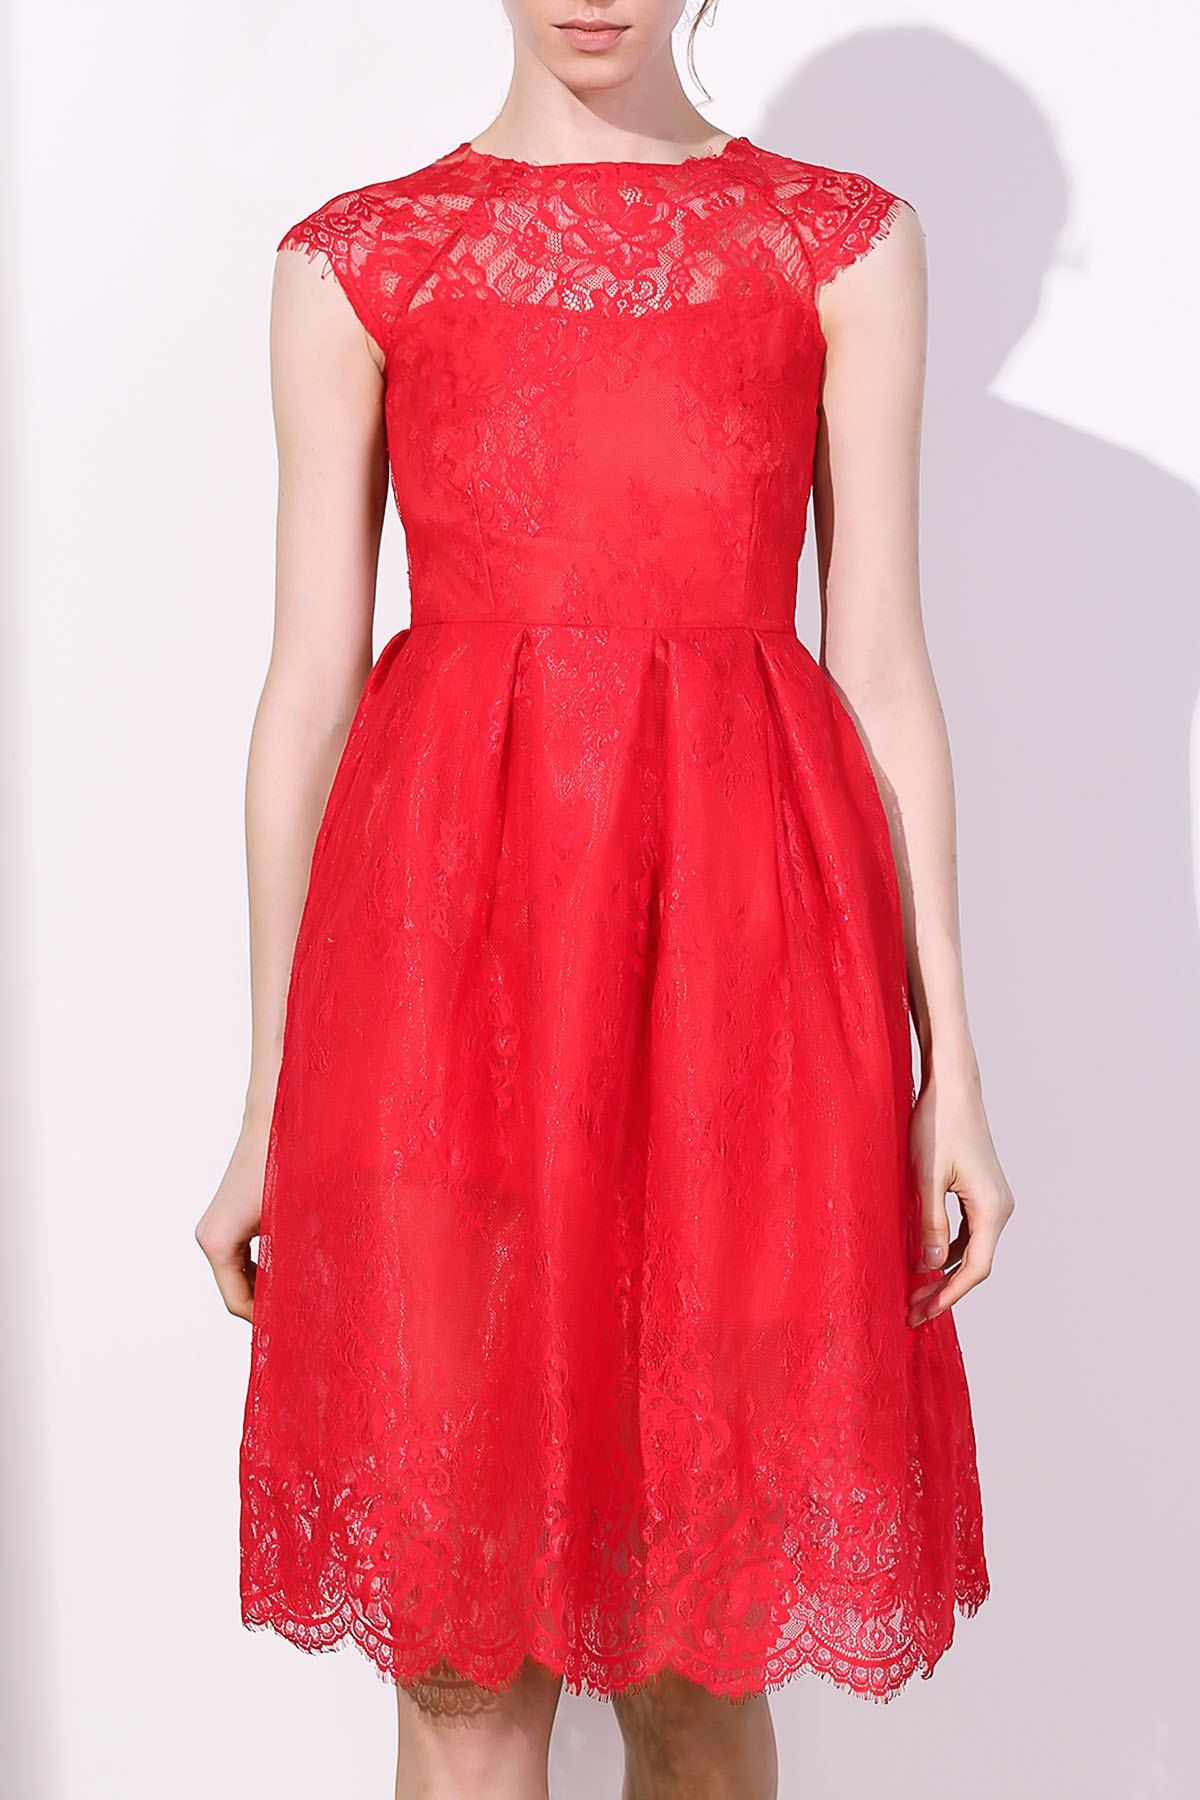 Red L Vintage Lace Short A Line Prom Dress | RoseGal.com